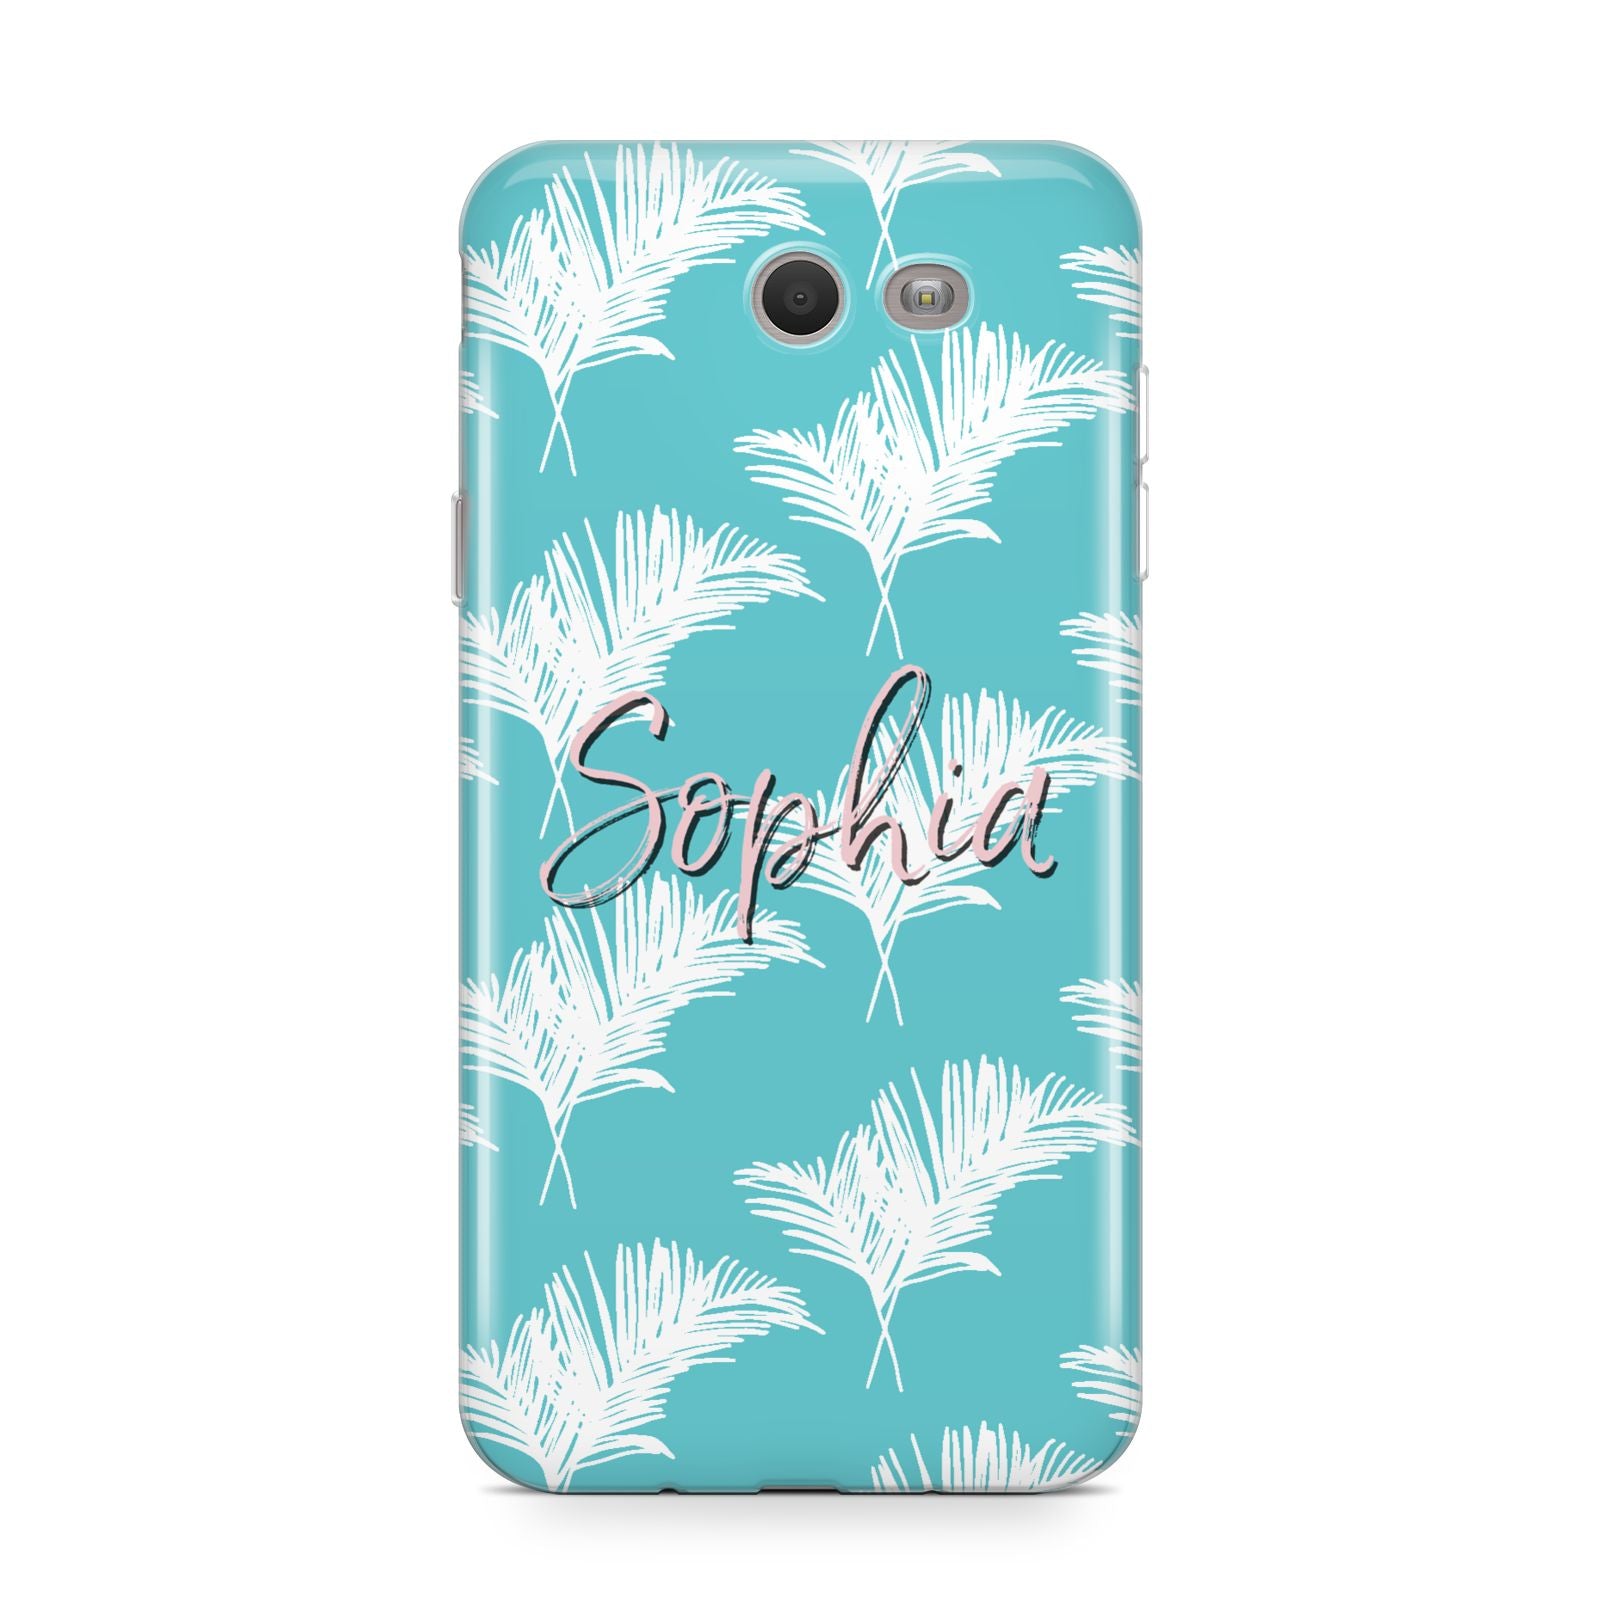 Personalised Blue White Tropical Foliage Samsung Galaxy J7 2017 Case